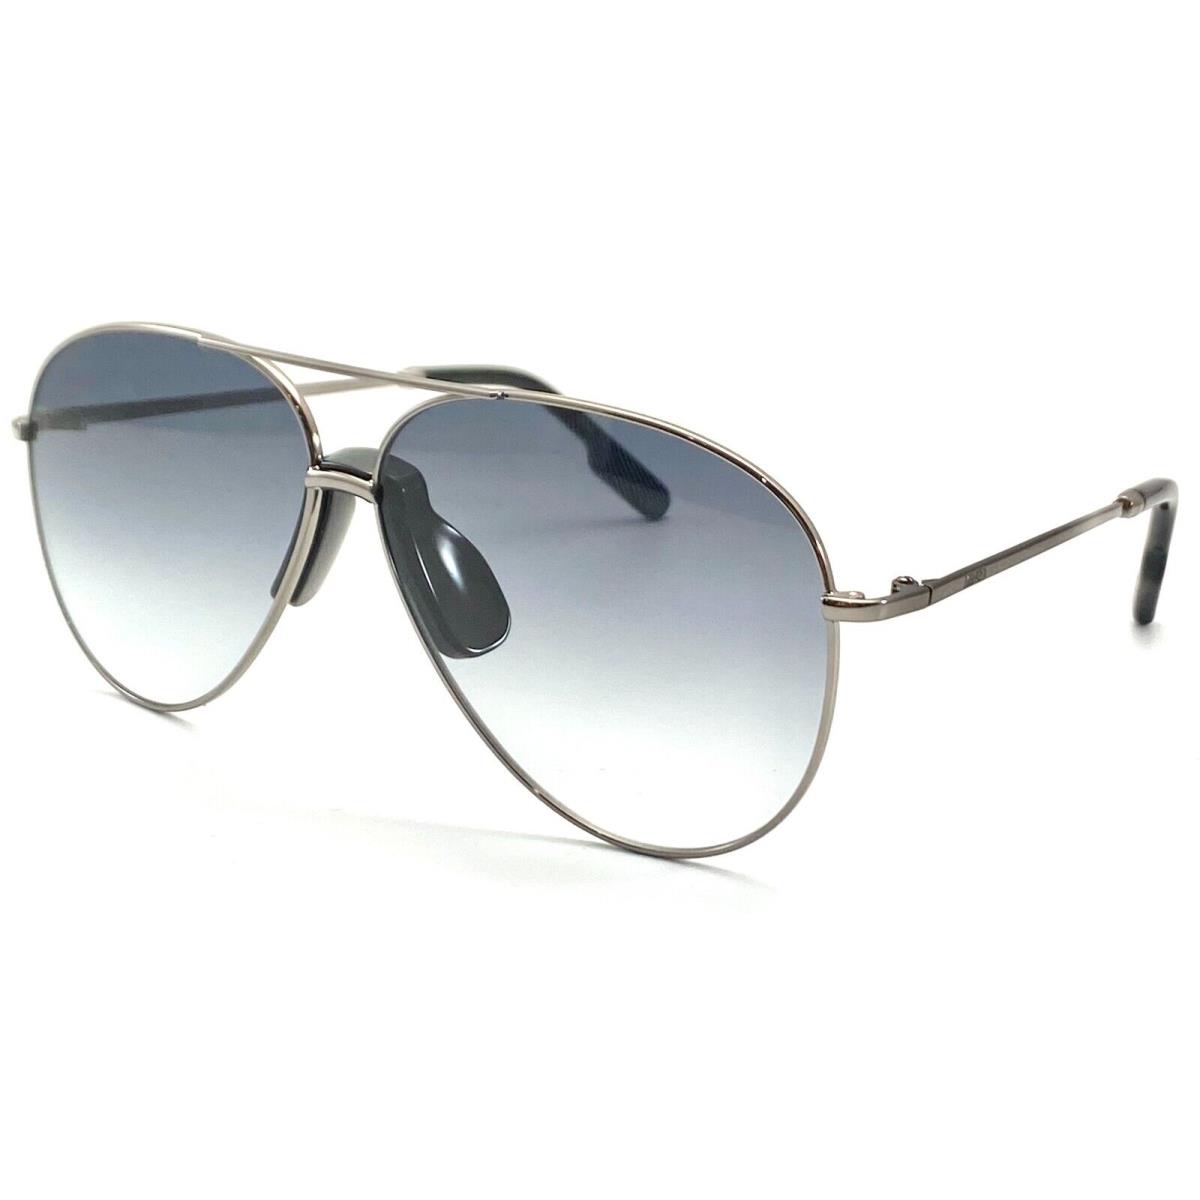 Kenzo Paris KZ40012I 12A Silver Sunglasses 61-10 140 W/case